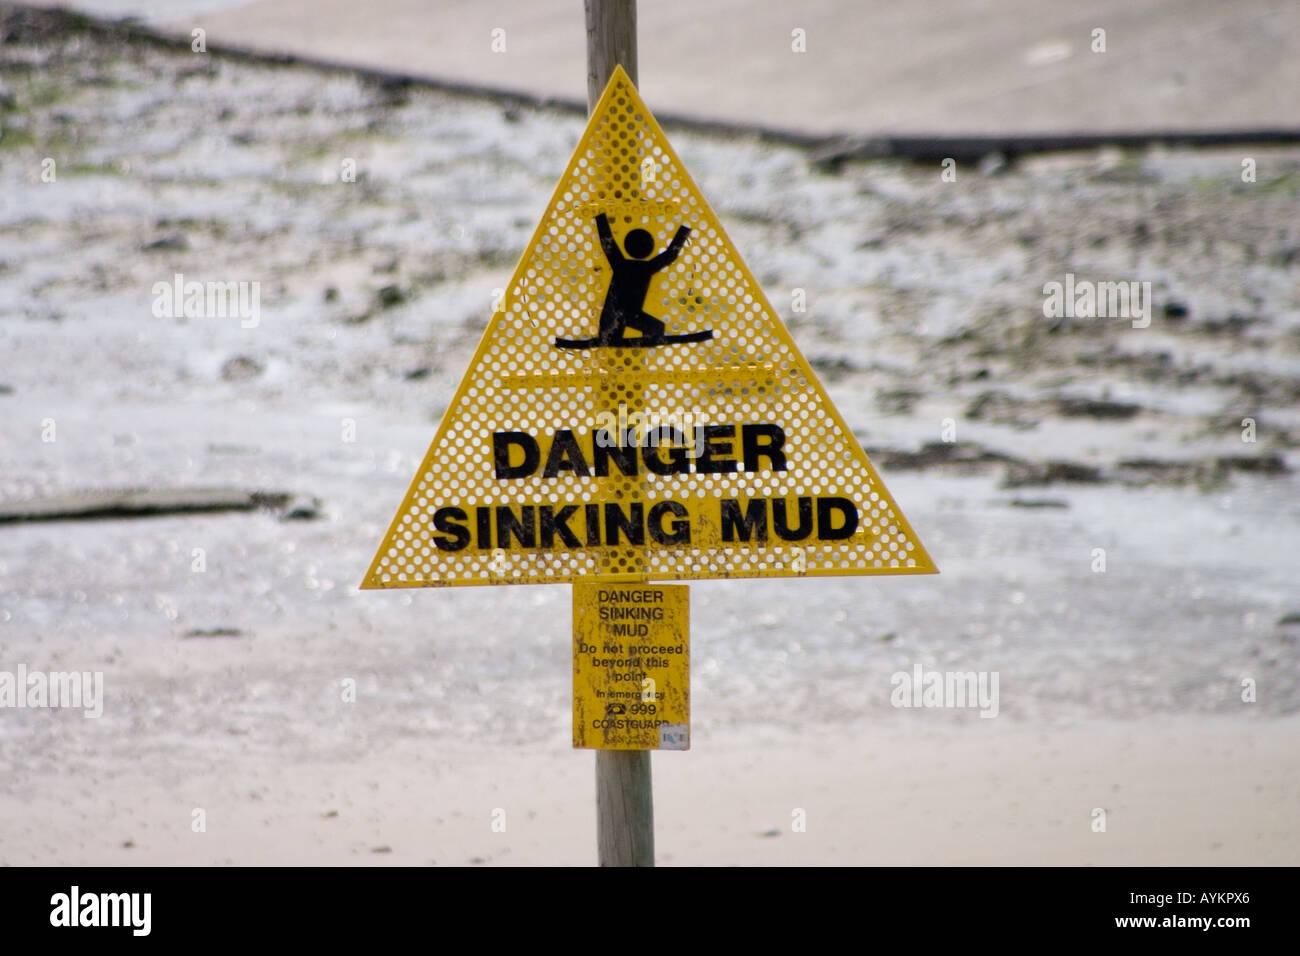 warning sign about skinking mud Stock Photo